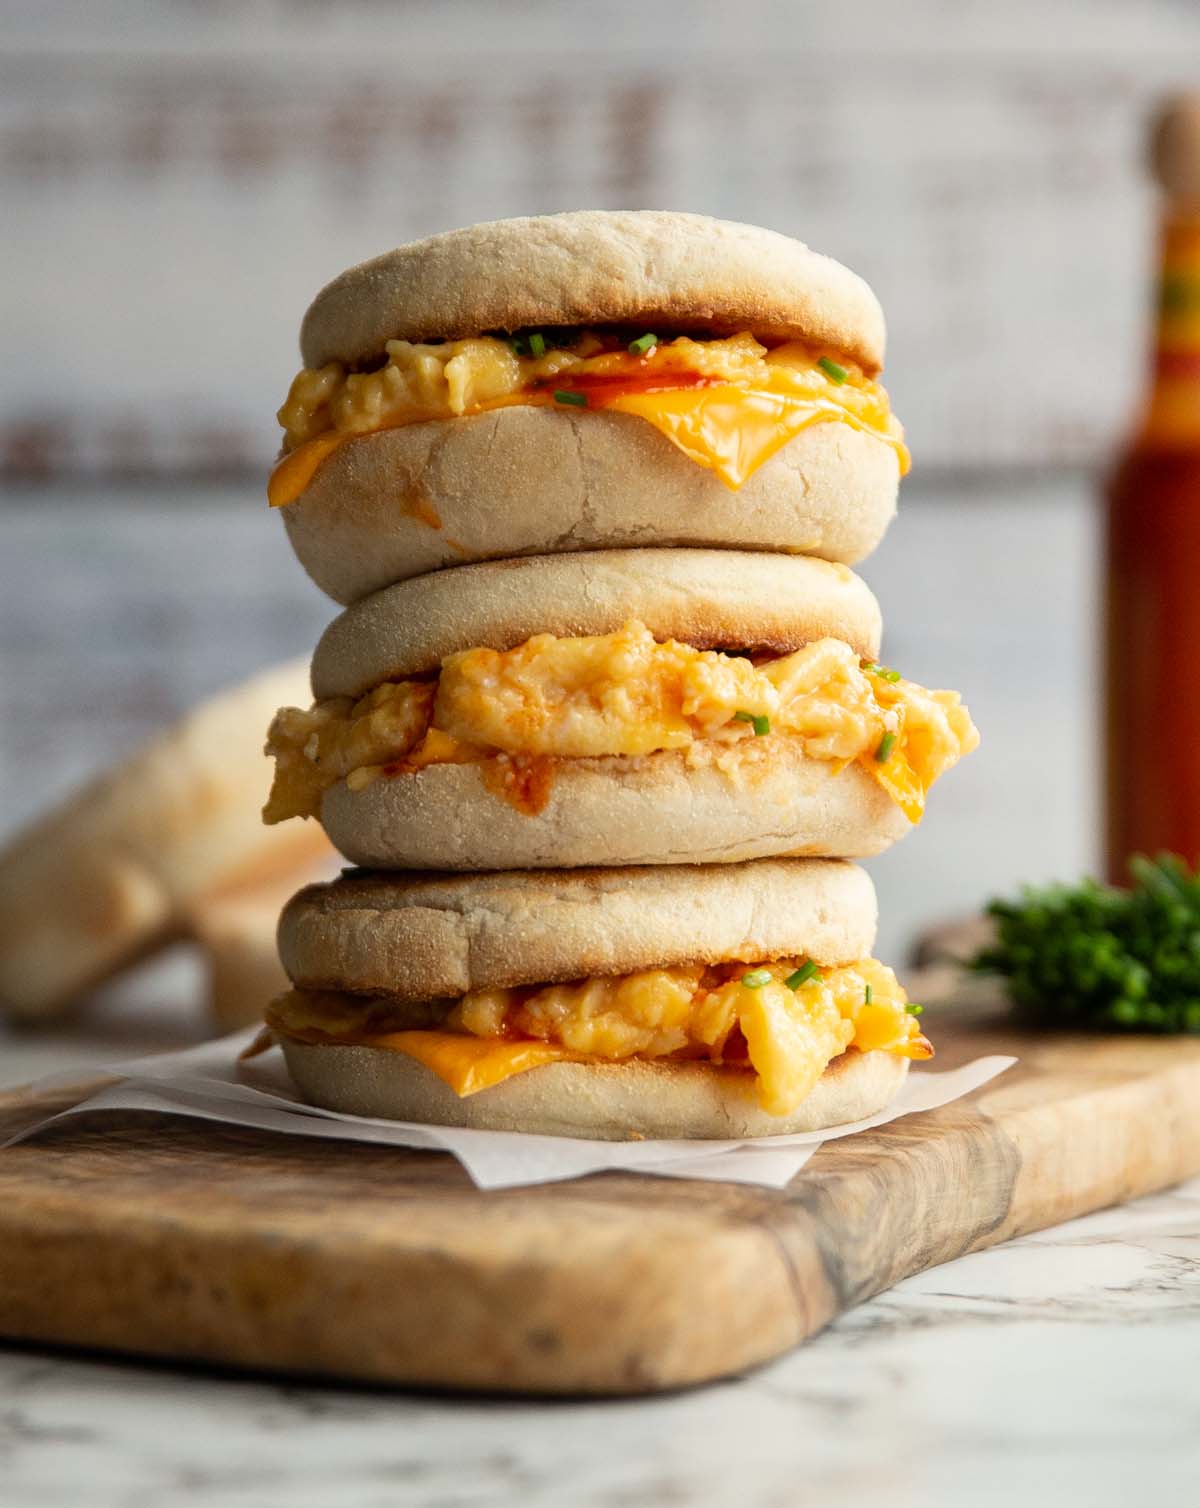 https://somethingaboutsandwiches.com/wp-content/uploads/2021/01/scrambled-egg-sandwich.jpg